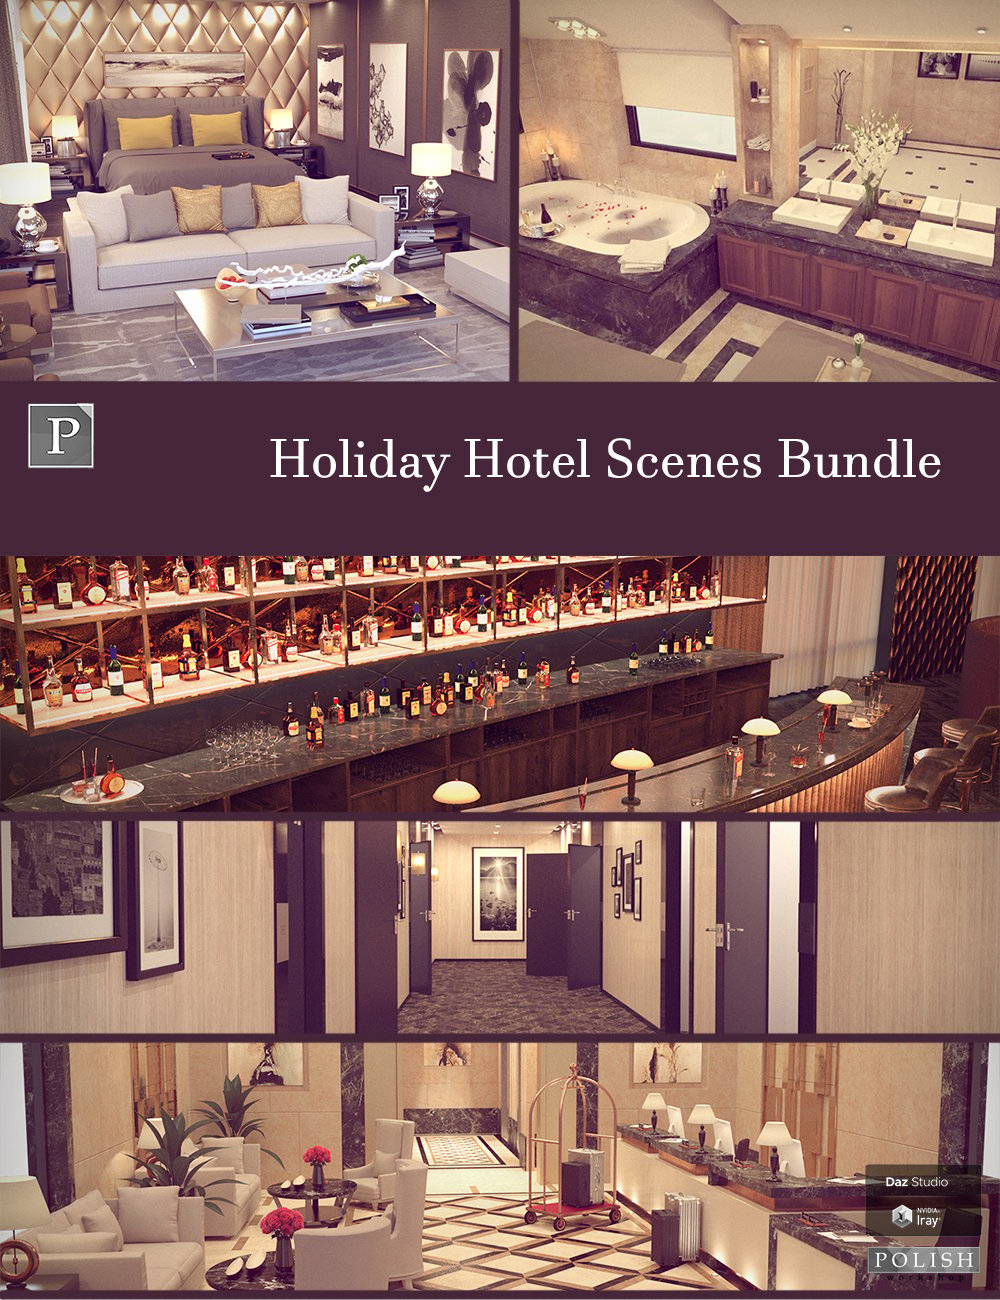 Holiday Hotel Scenes Bundle by: Polish, 3D Models by Daz 3D